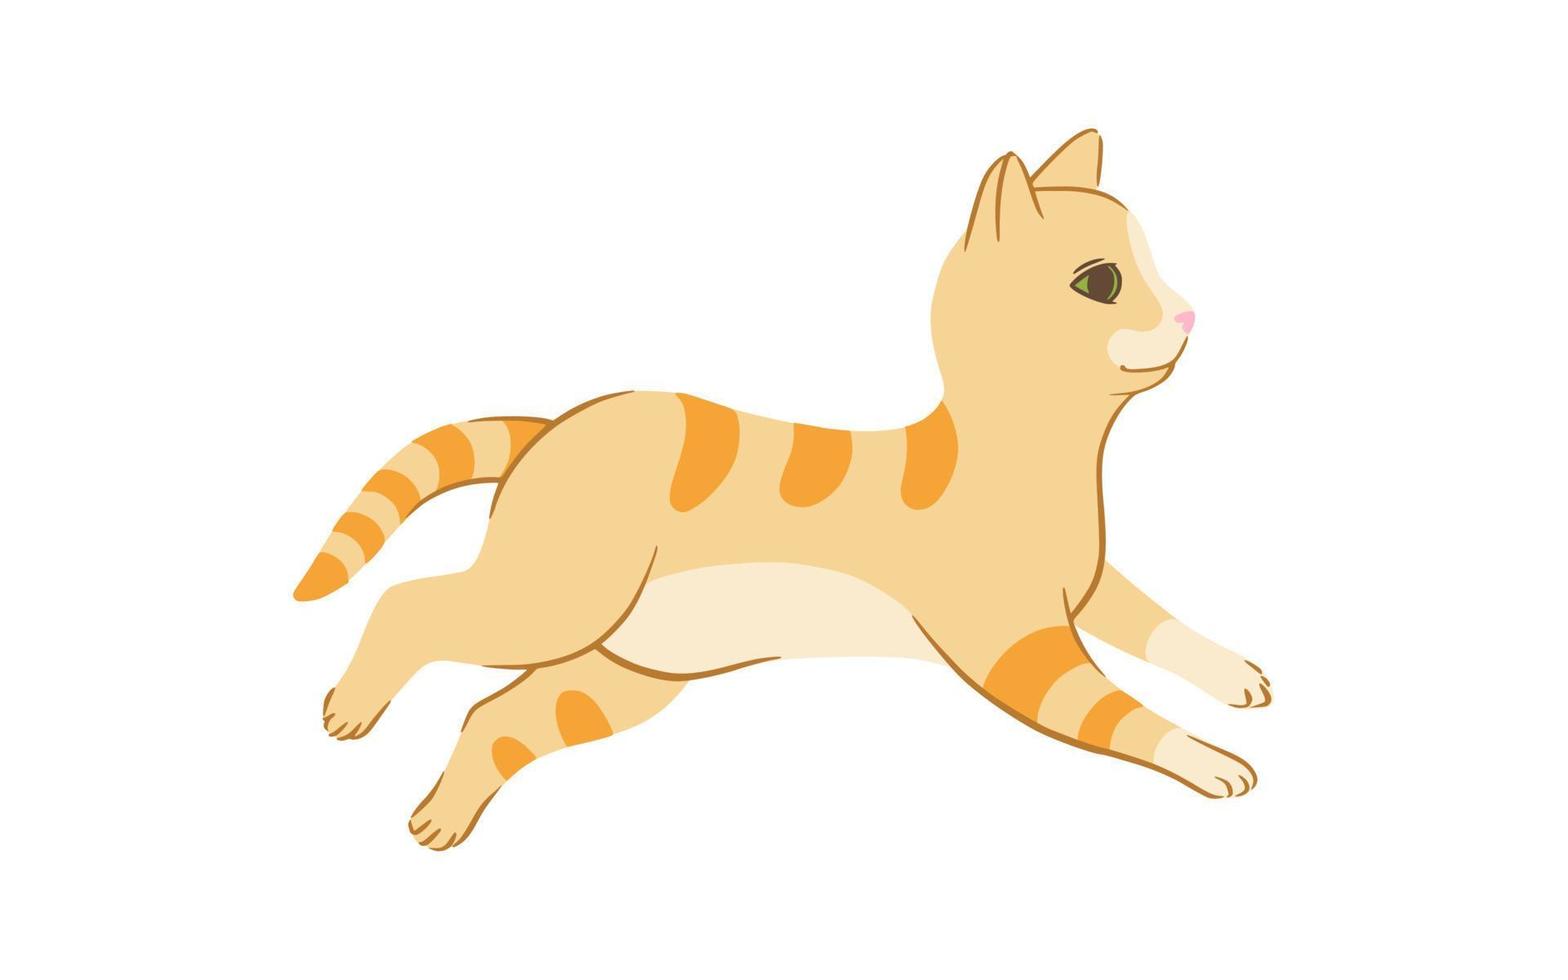 liegende gestreifte Katze im Doodle-Stil. farbige verspielte Katze. Vektor-Illustration vektor